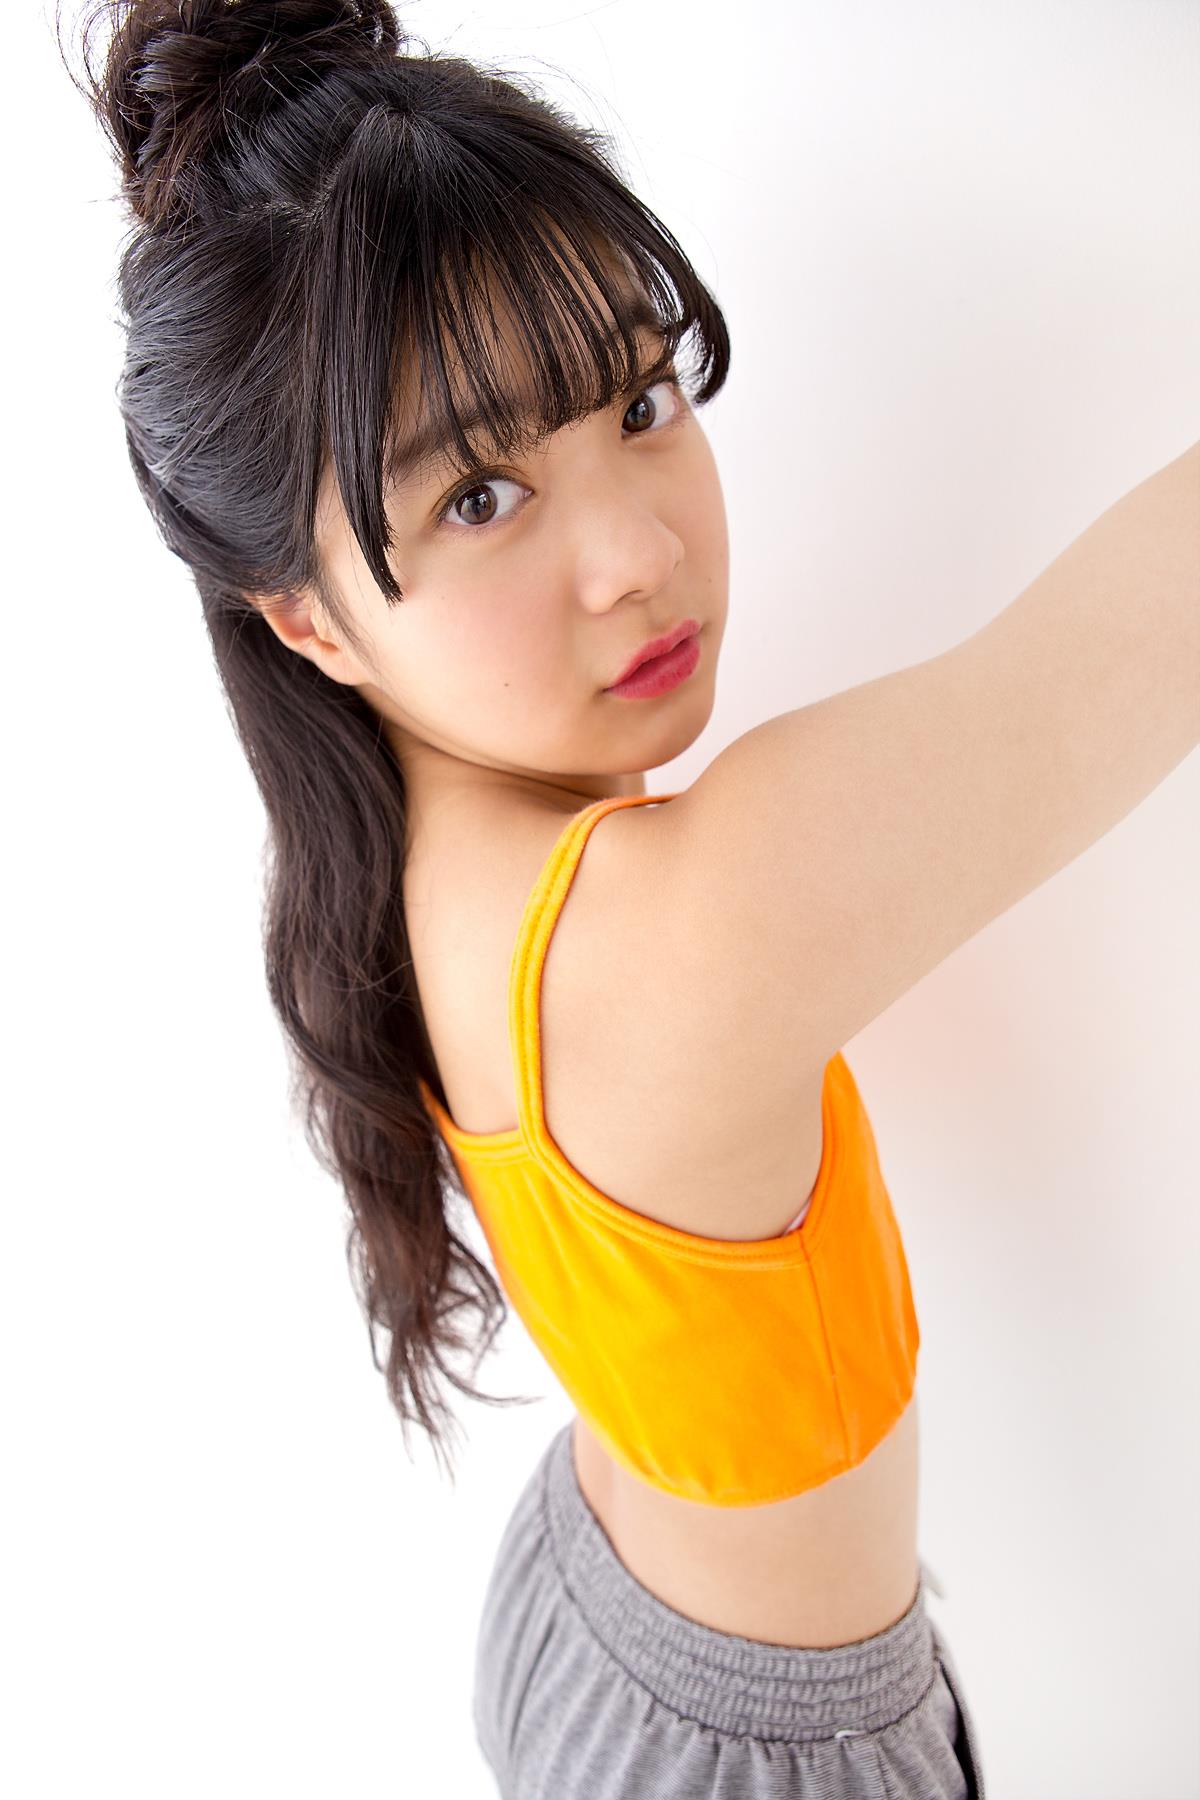 Minisuka.tv Saria Natsume 夏目咲莉愛 Premium Gallery 02 - 26.jpg